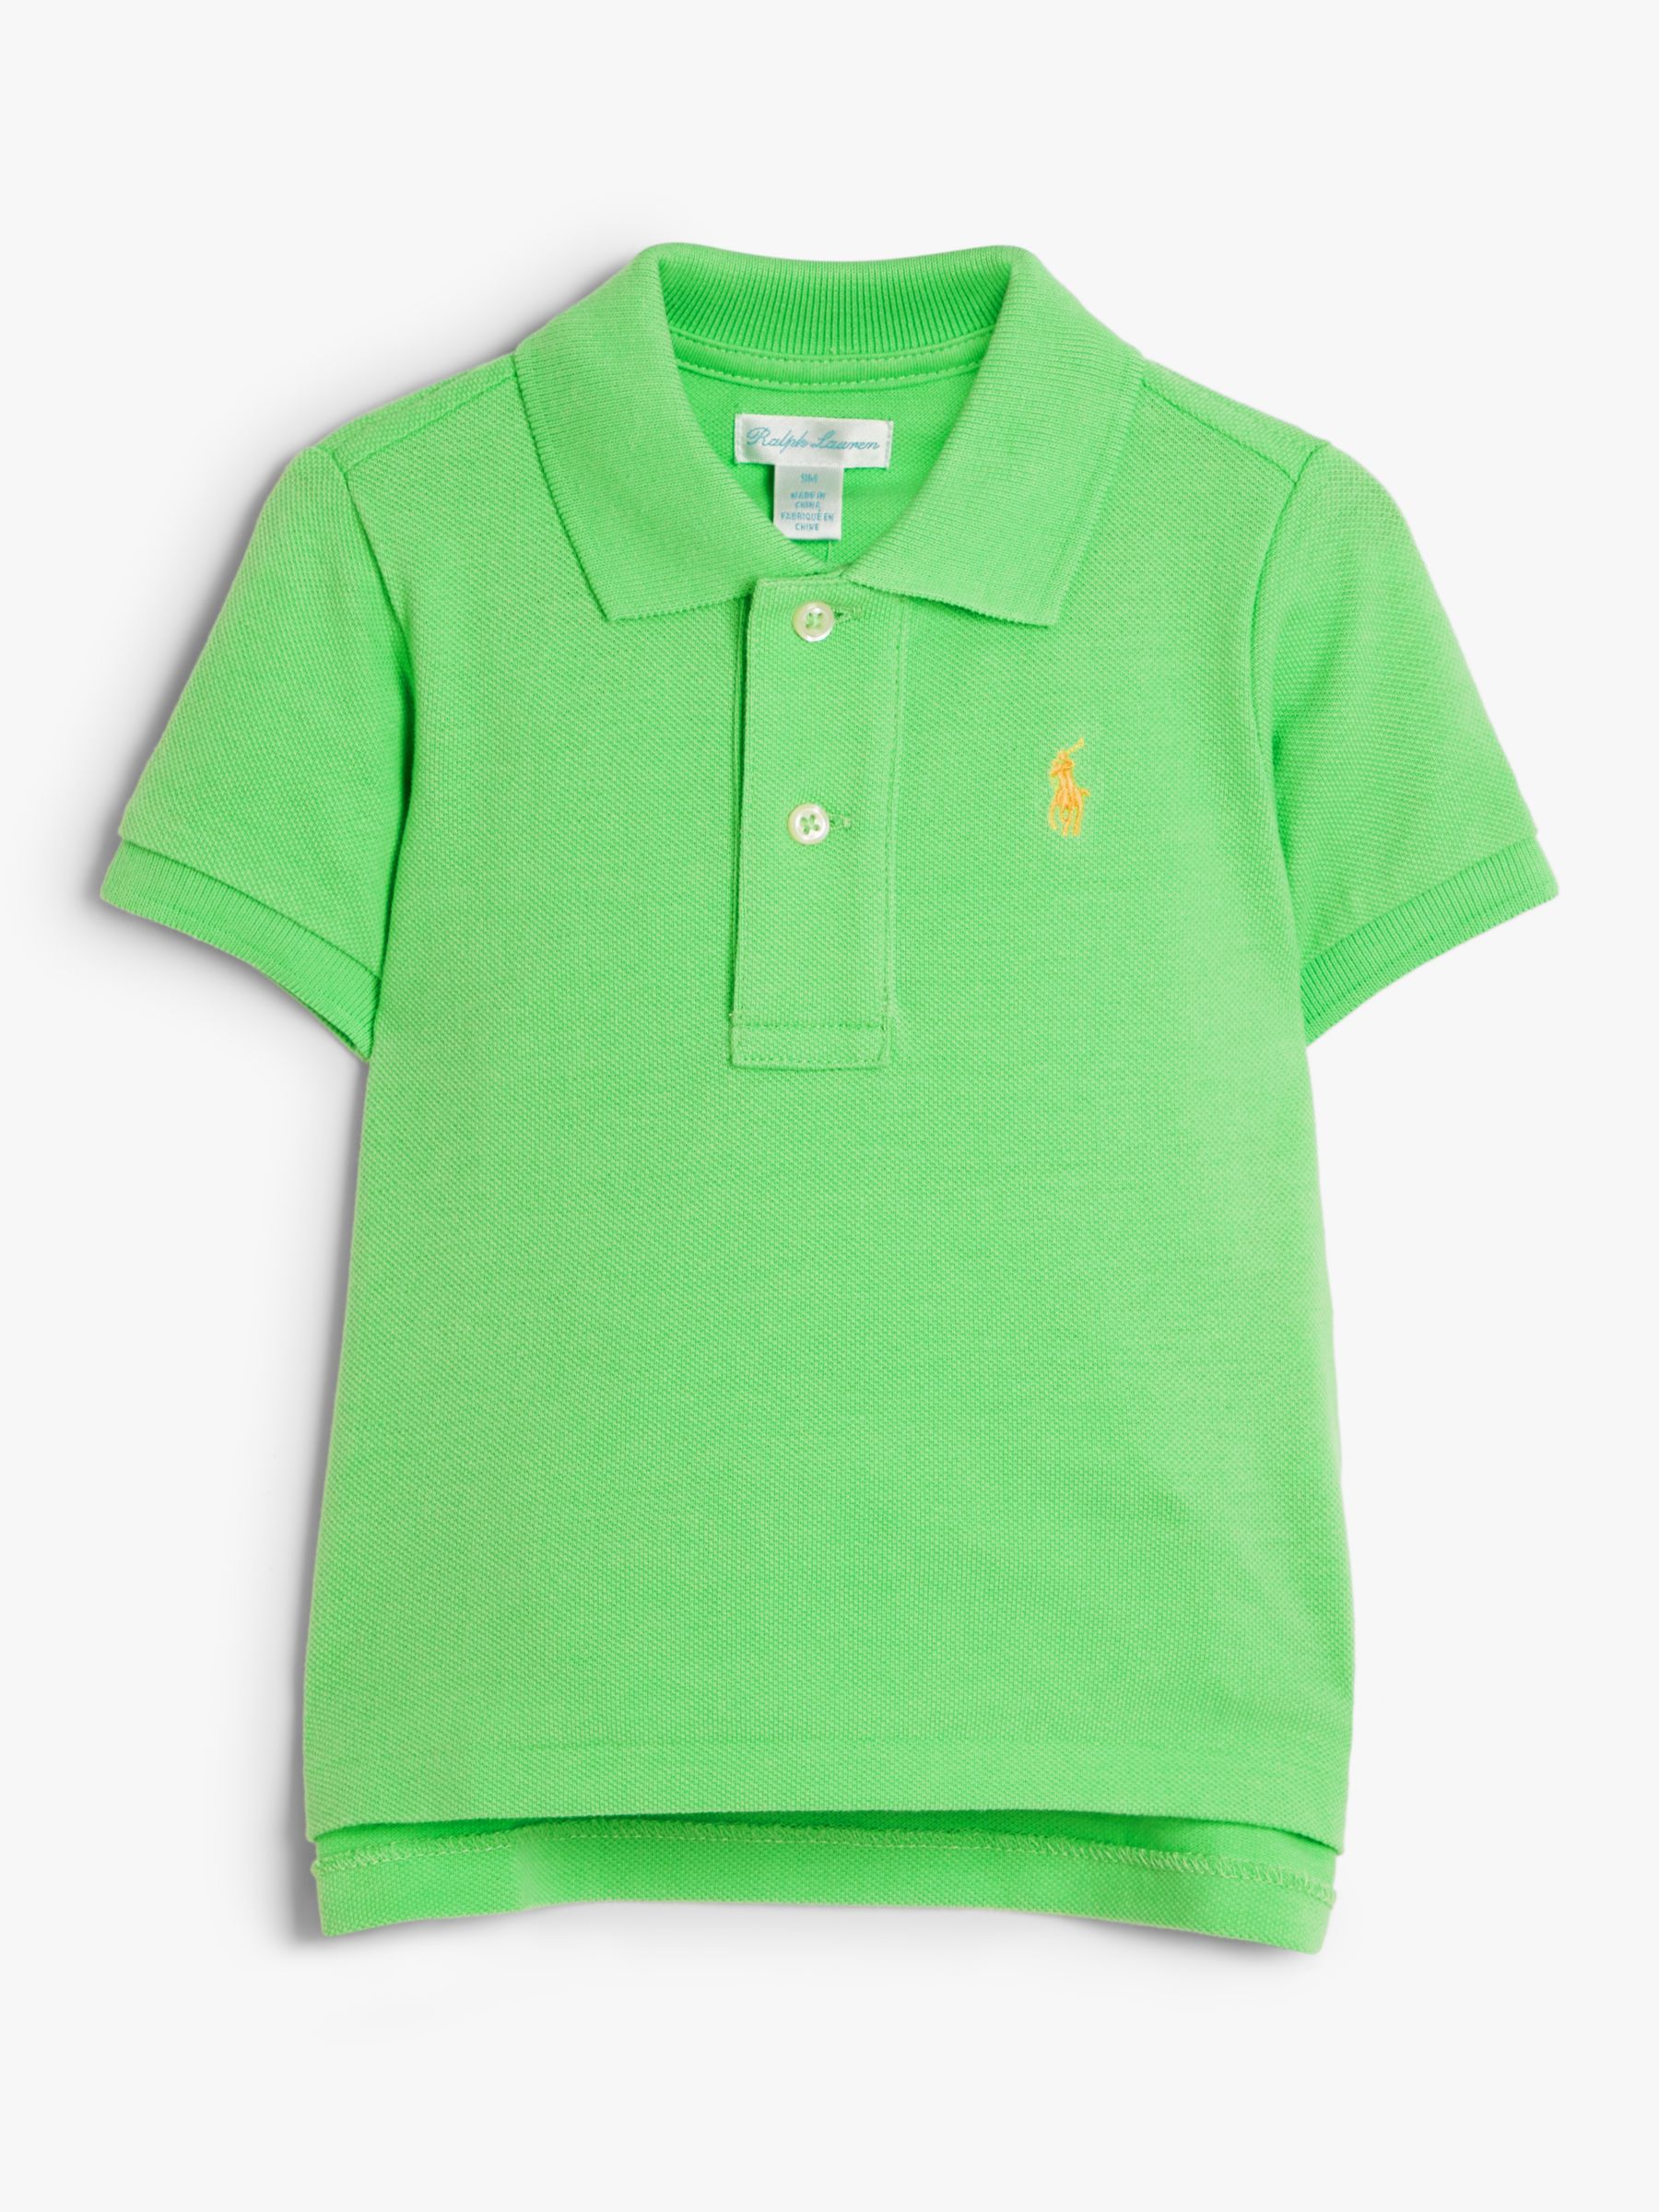 Polo Ralph Lauren Baby Mesh Polo Shirt, Green at John Lewis & Partners